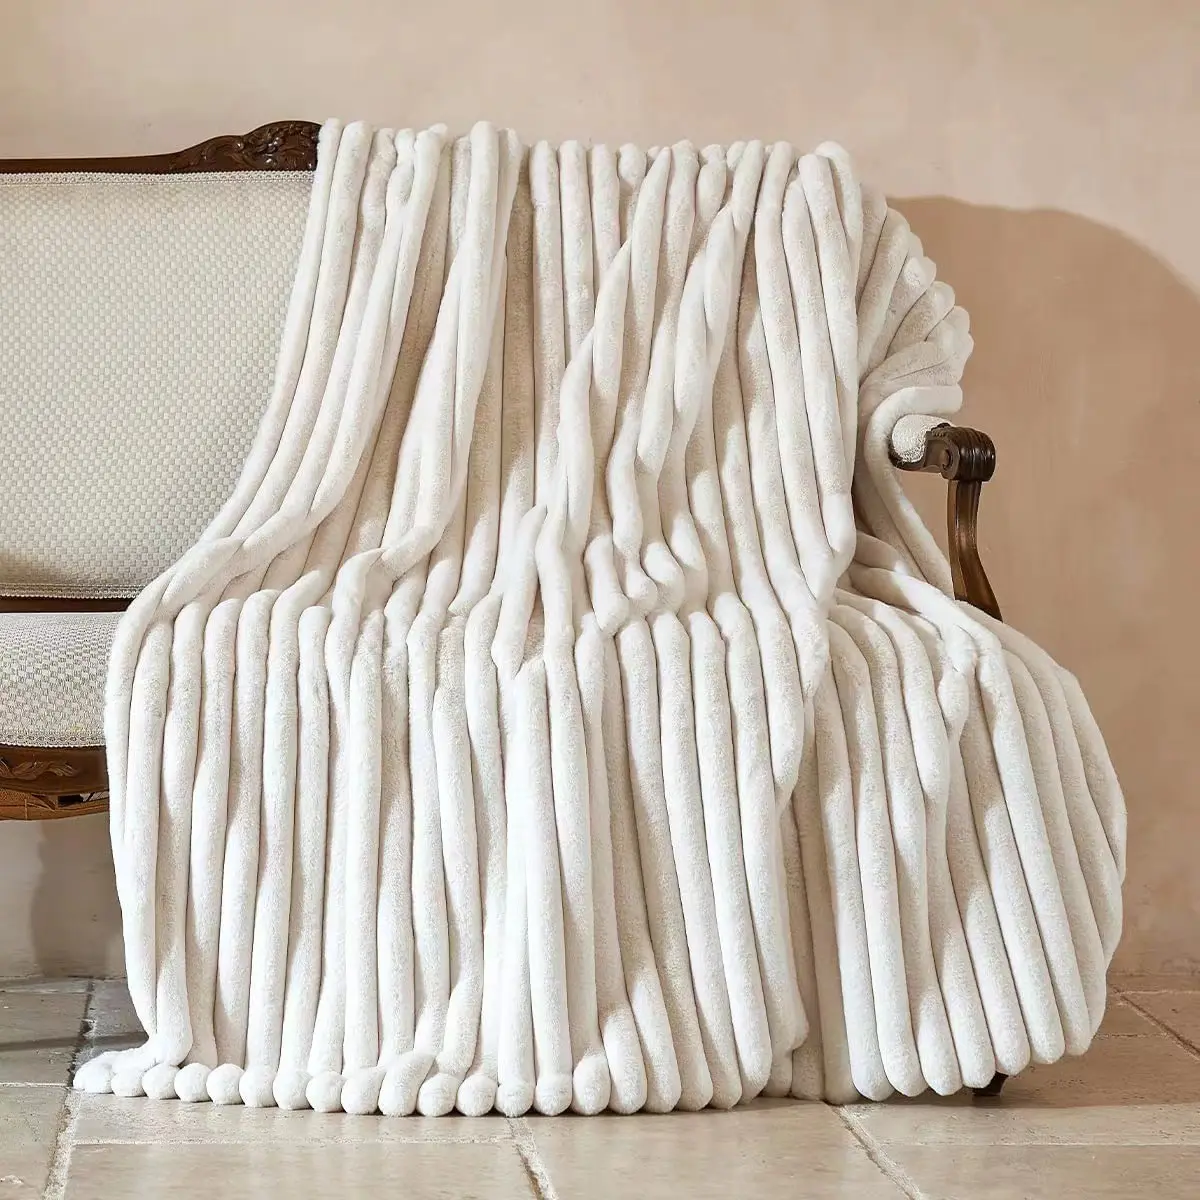 Coperte di lusso in pelliccia sintetica a righe Jacquard Texture accogliente coperta di peluche soffice al latte per divano divano